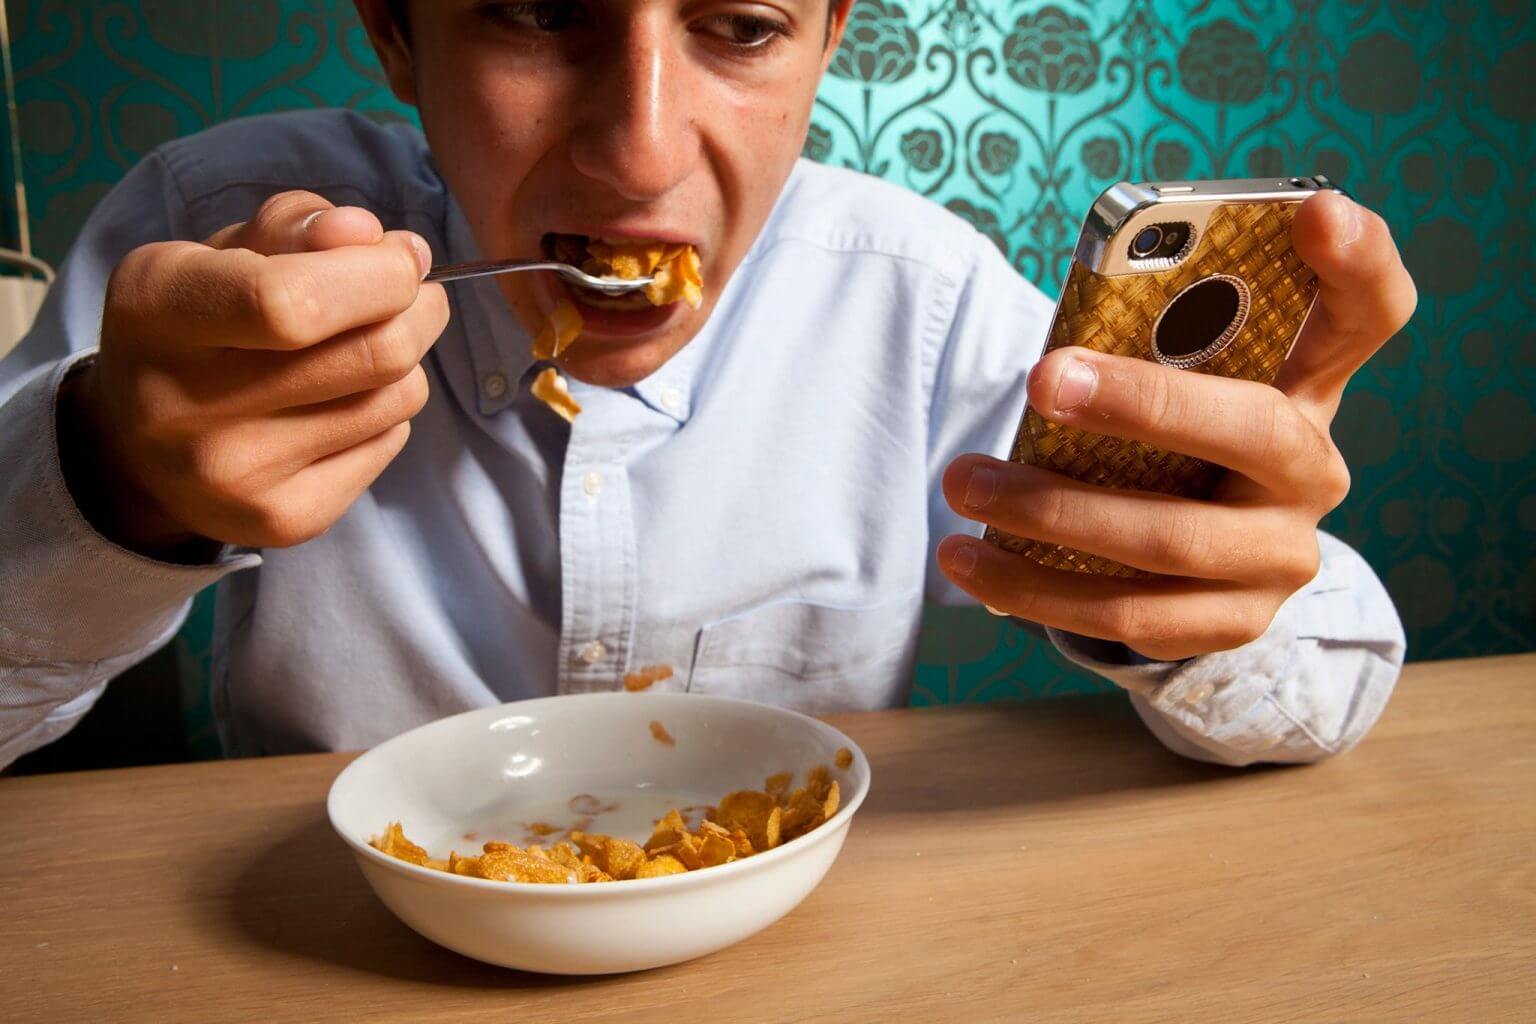 Кушает с телефоном. Человек кушает. Человек с мобильником за едой. Человек кушает с телефоном.